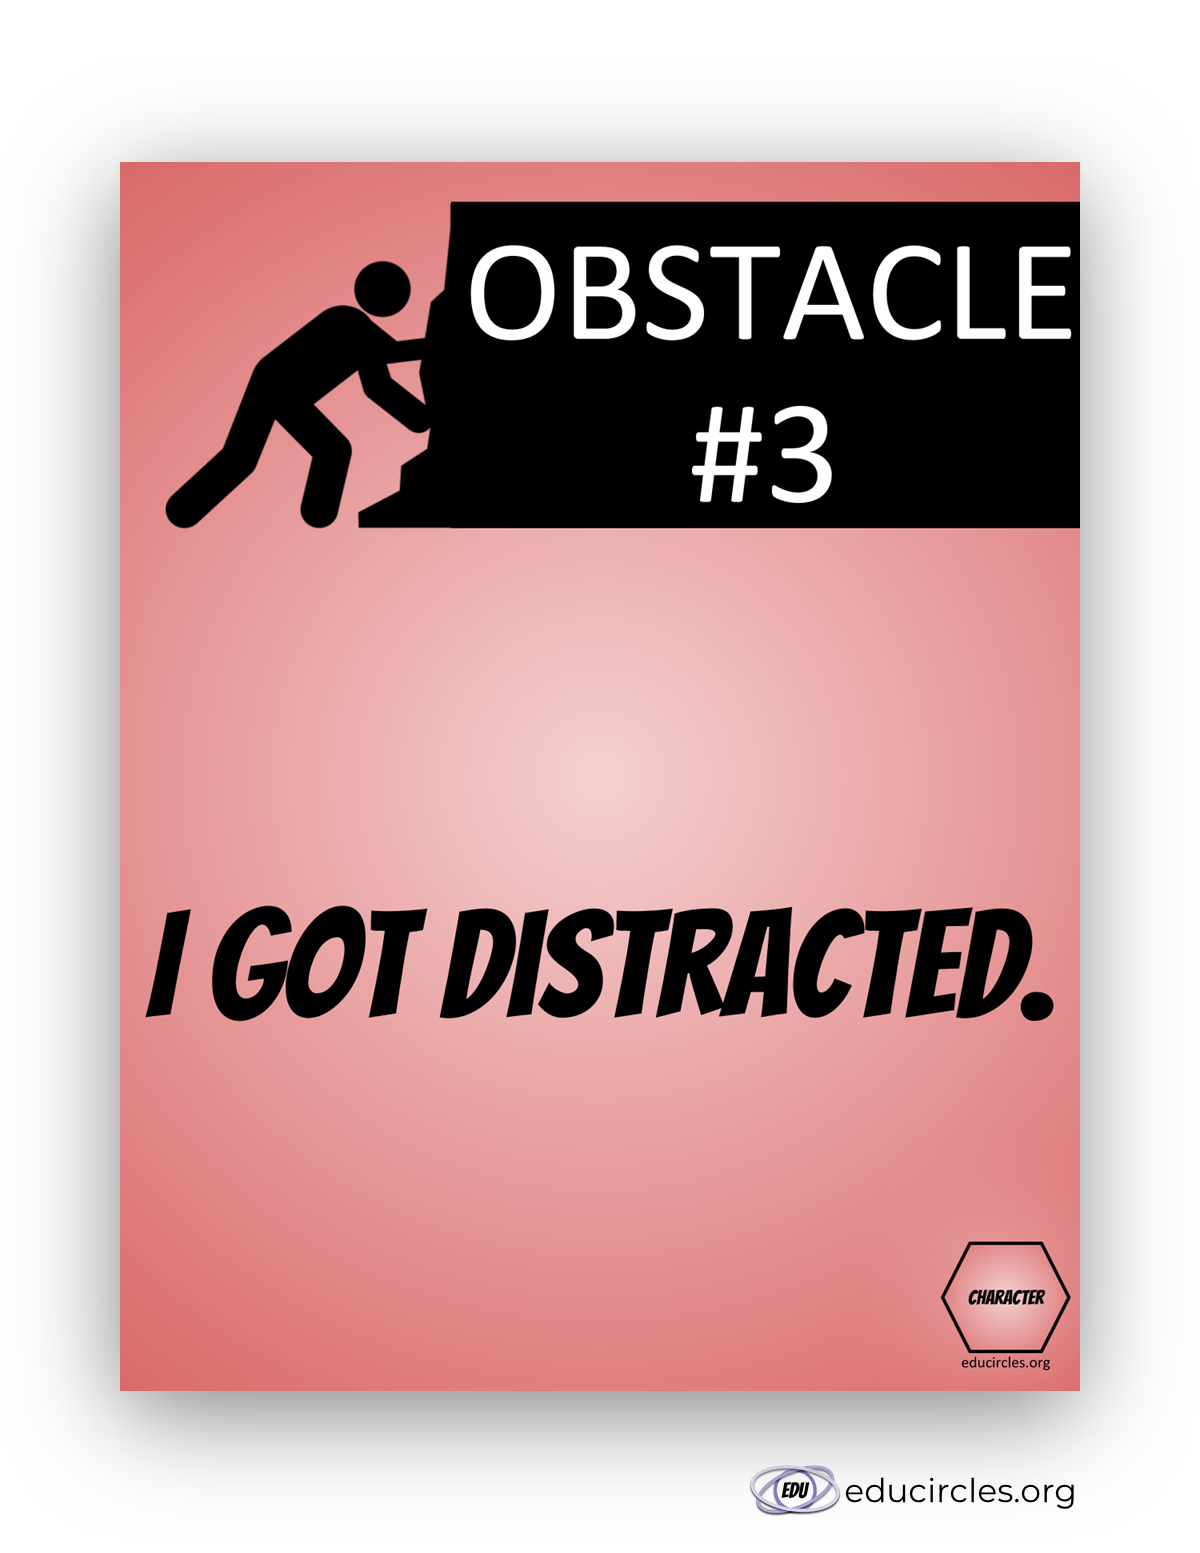 Printable Poster PDF slide 6 - Obstacle #3: I got distracted